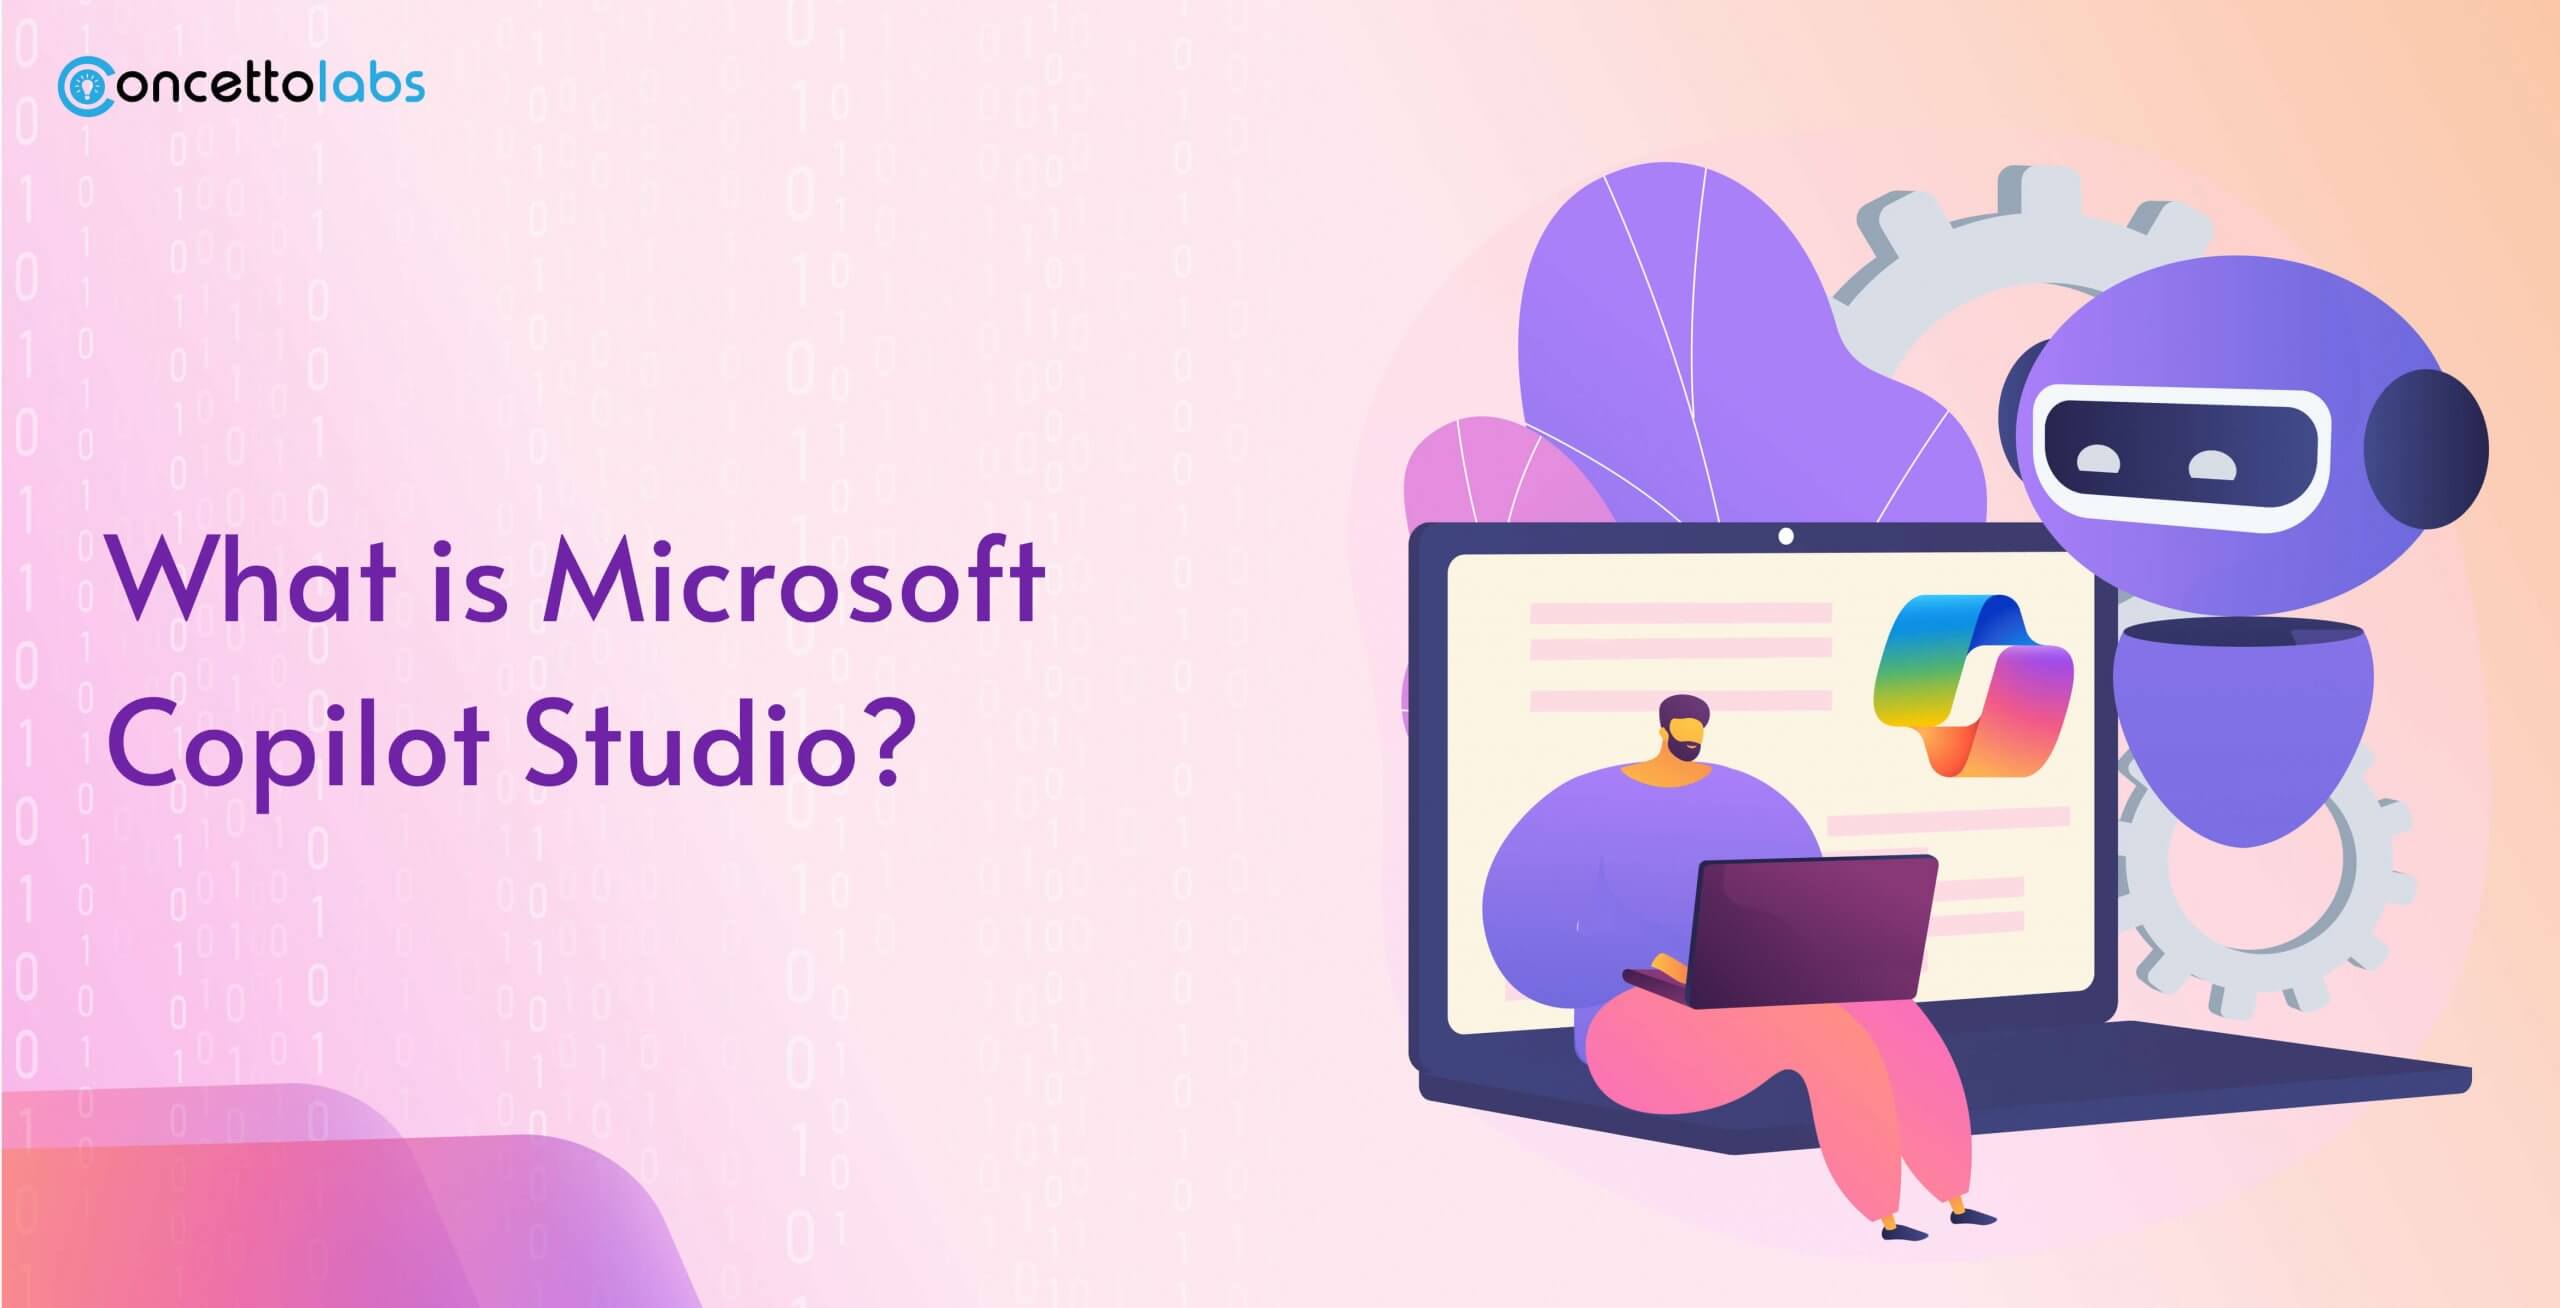 What is Microsoft Copilot Studio?